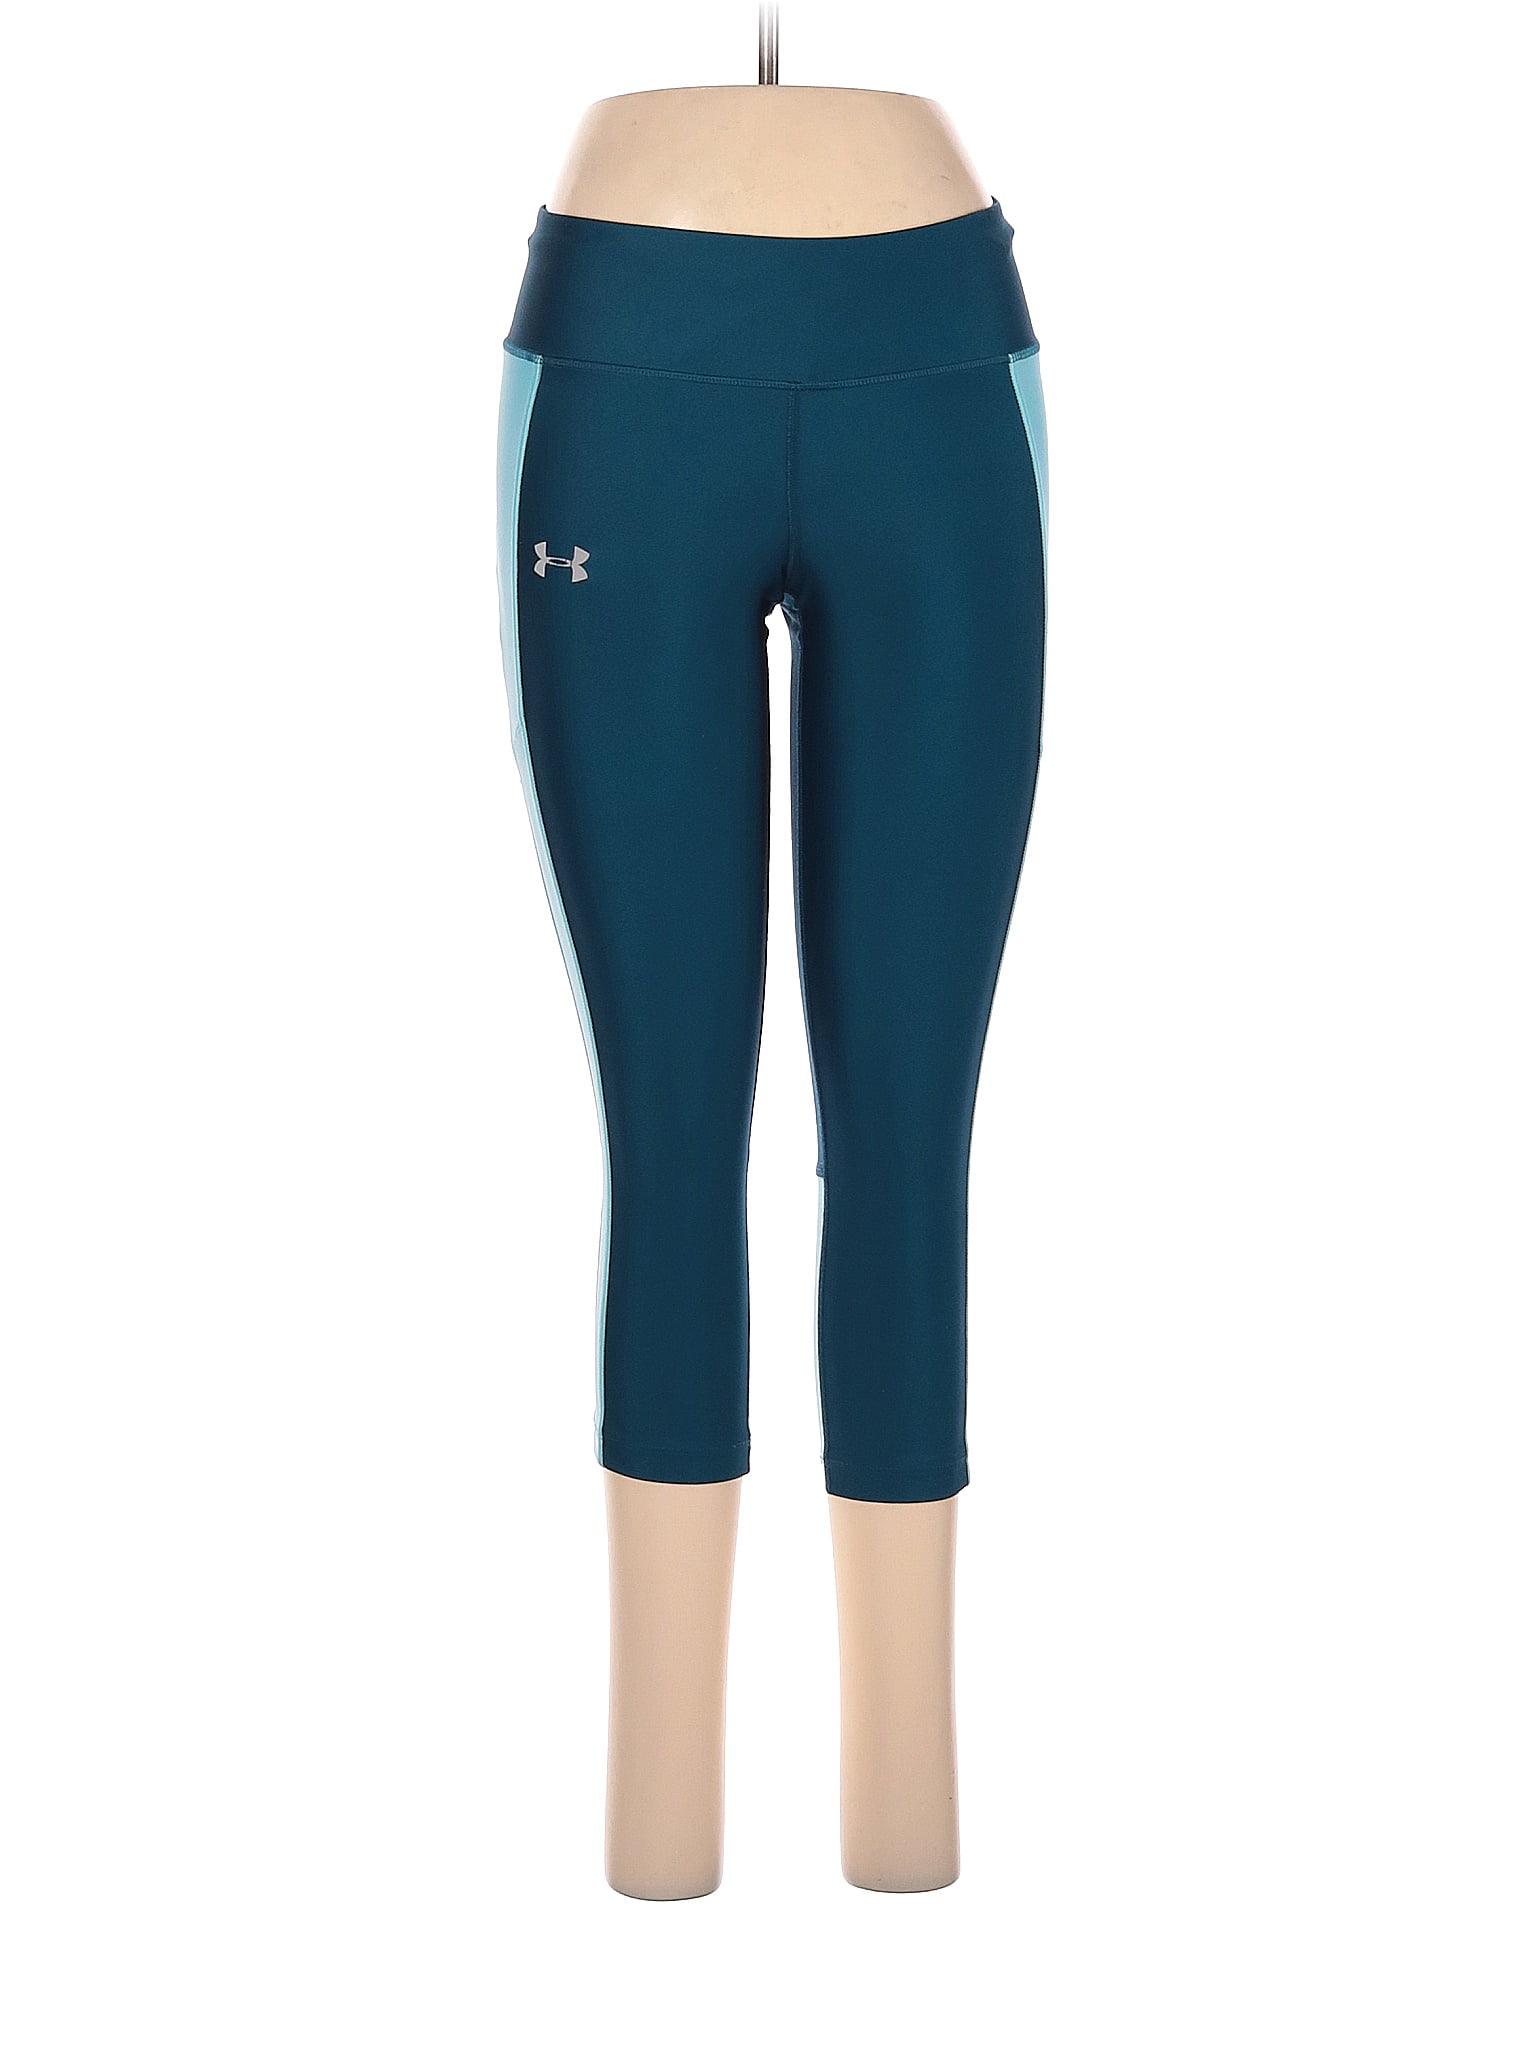 Pre-Owned Under Armour Women's Size S Yoga Pants - Walmart.com